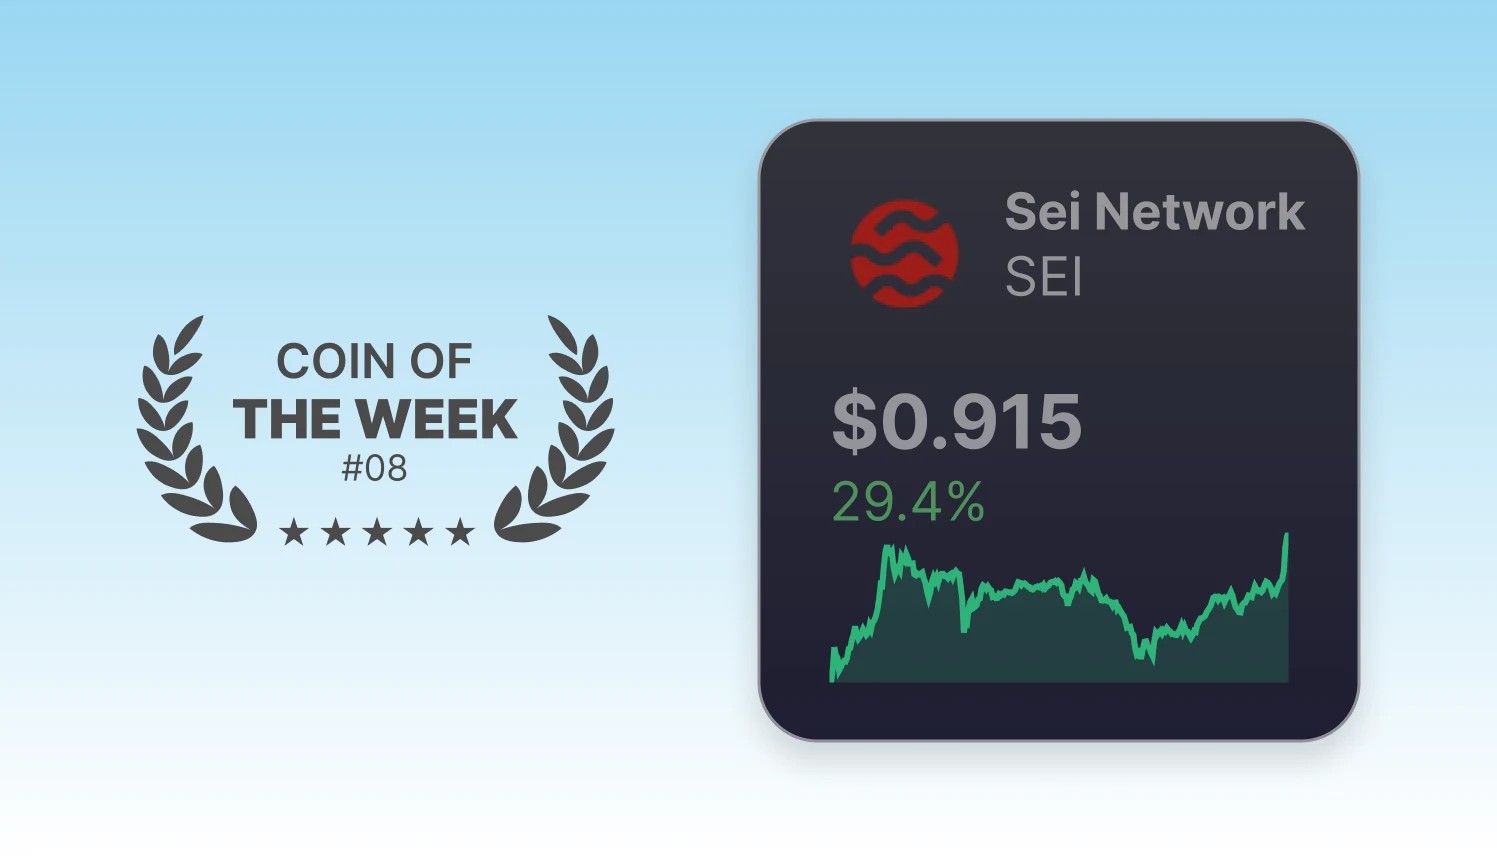 Coin of the Week - SEI - Week 08